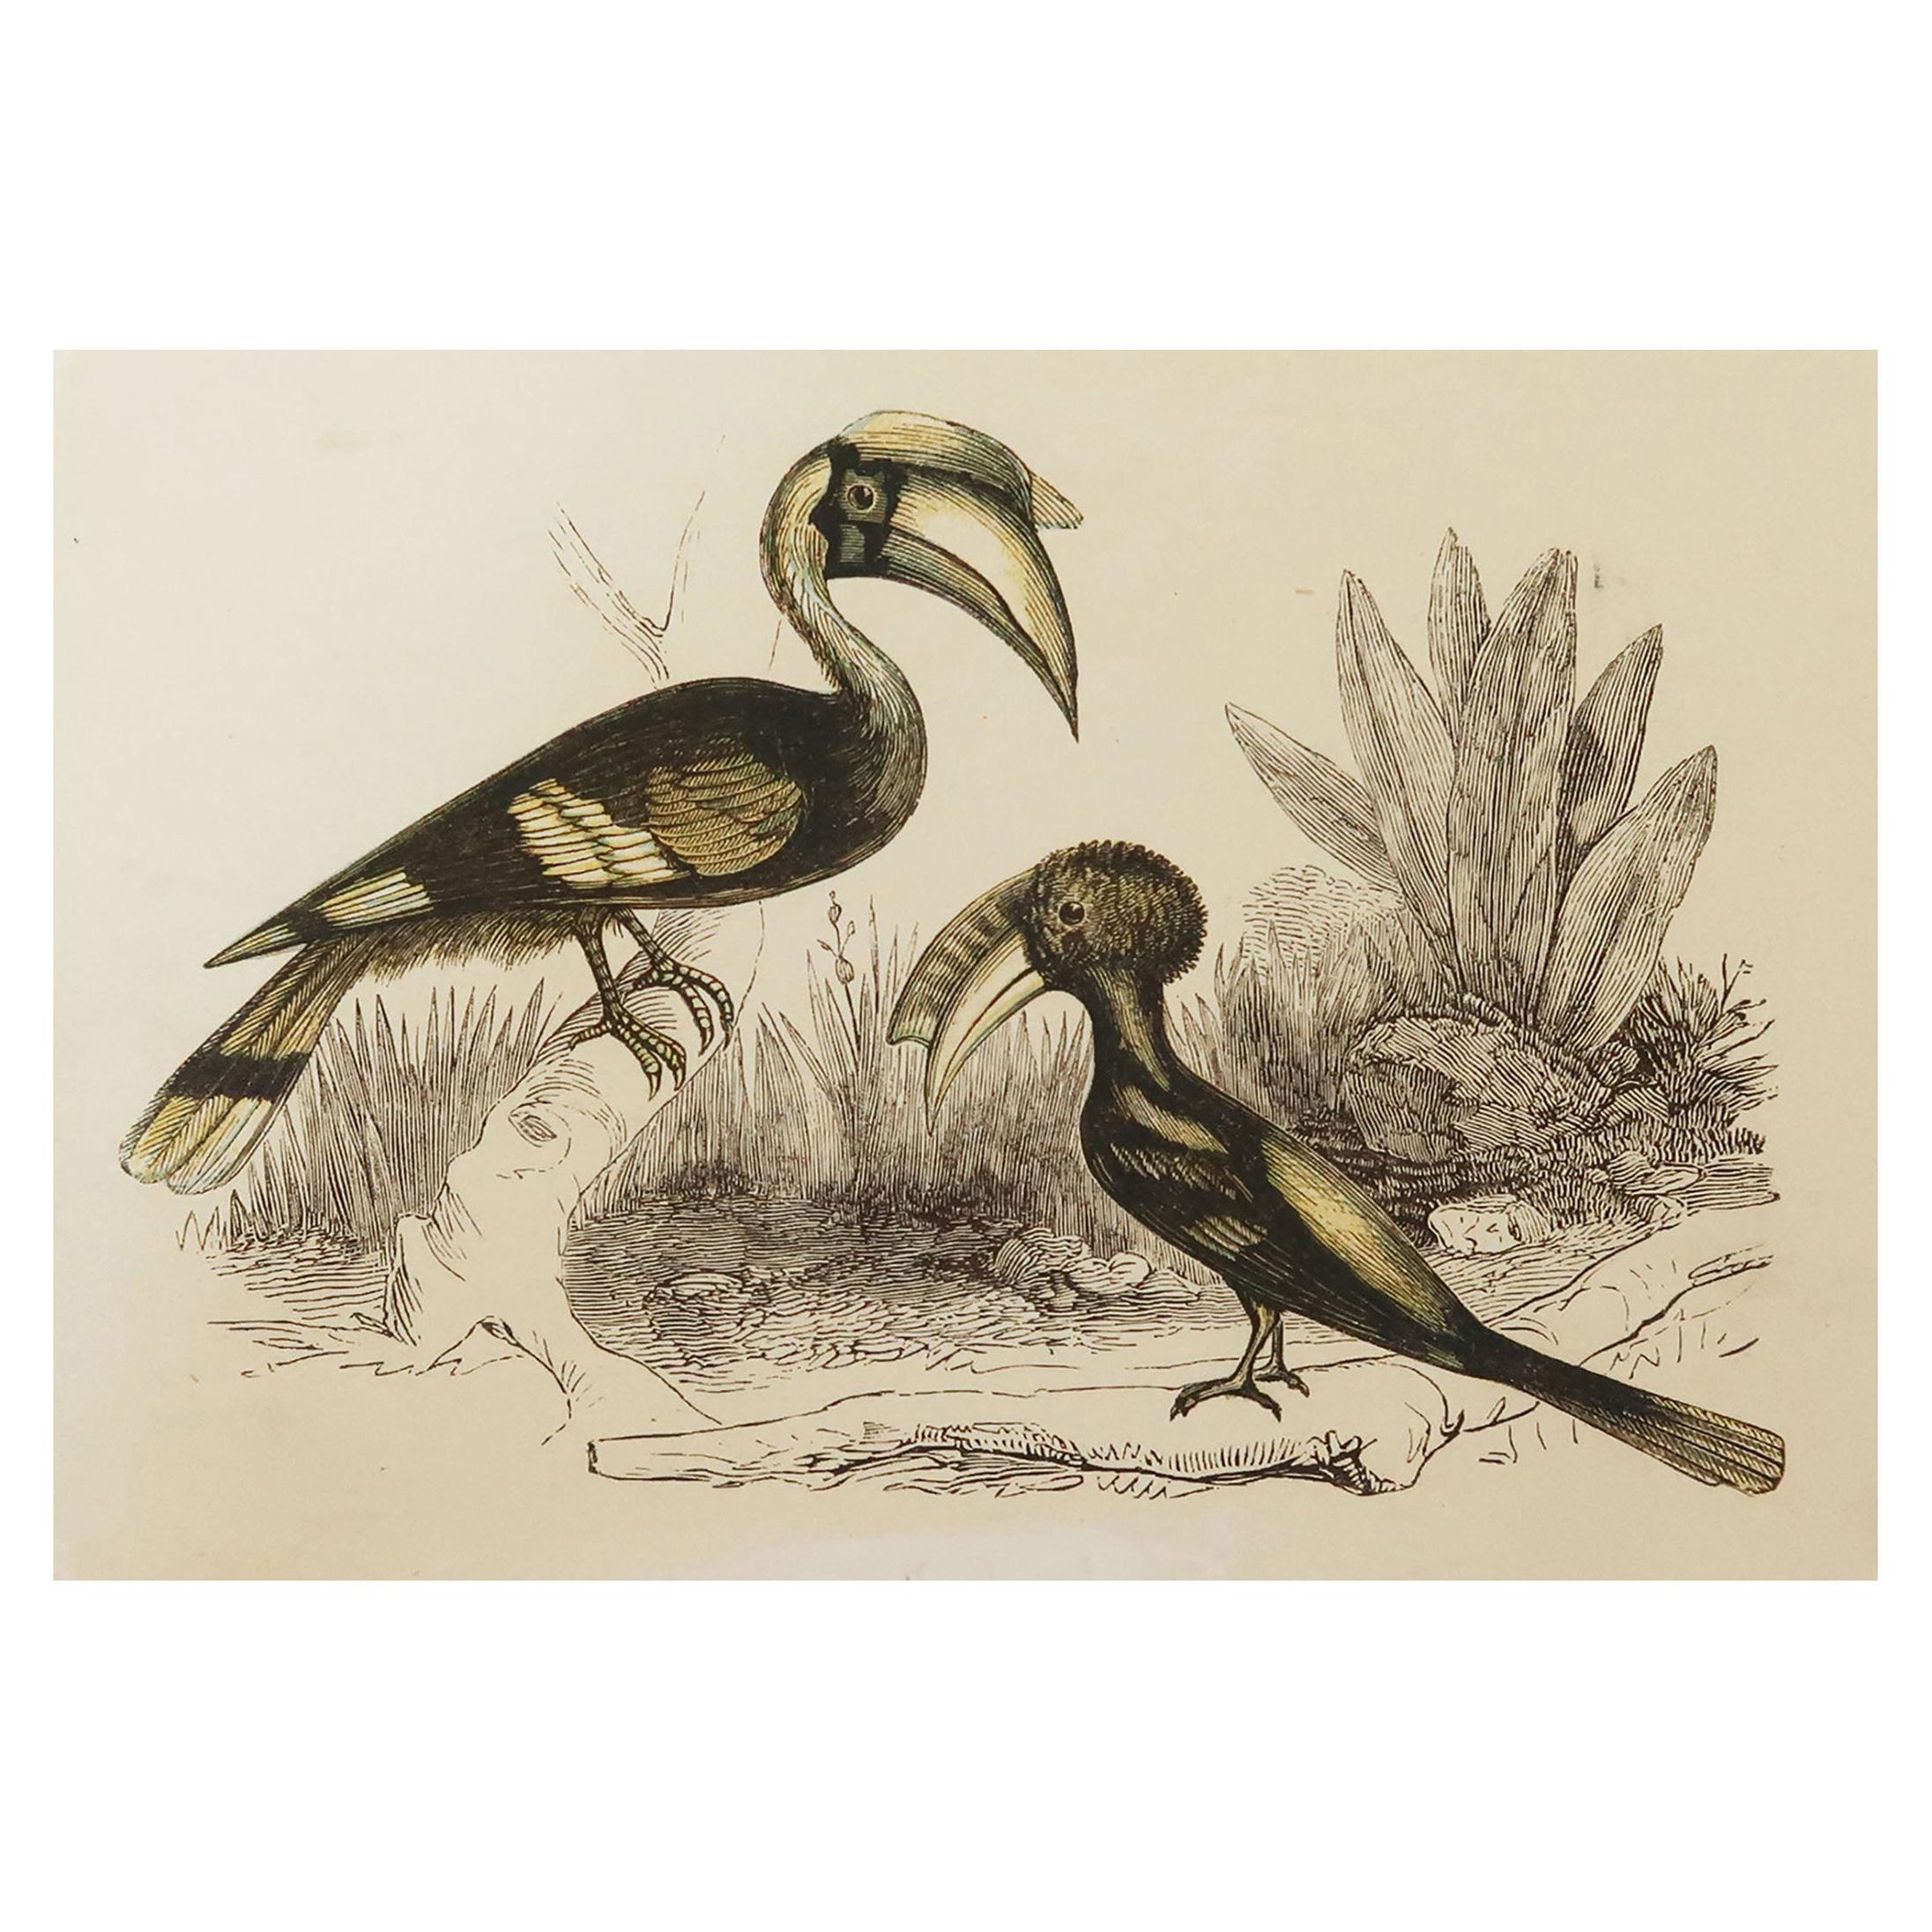 Original Antique Bird Print, the Hornbill, Tallis, circa 1850